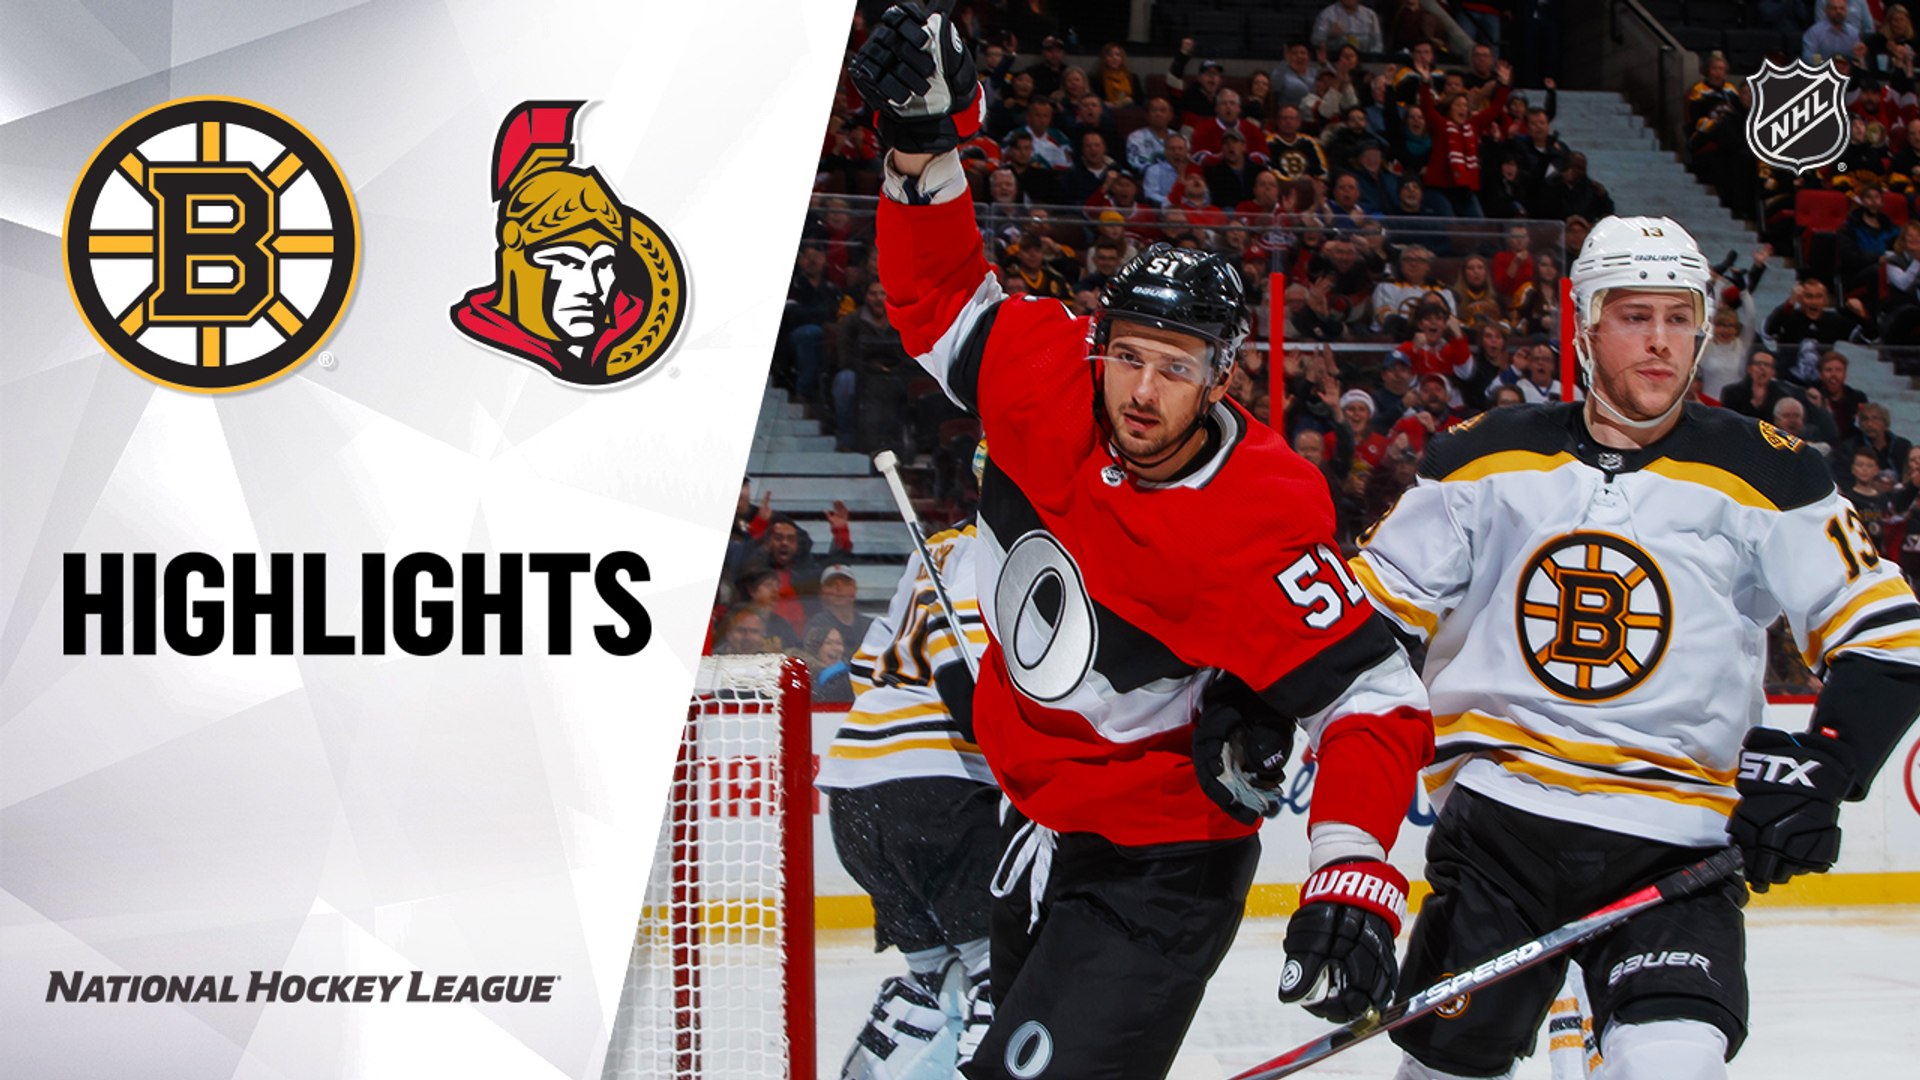 NHL Highlights | Bruins @ Senators 12/9 